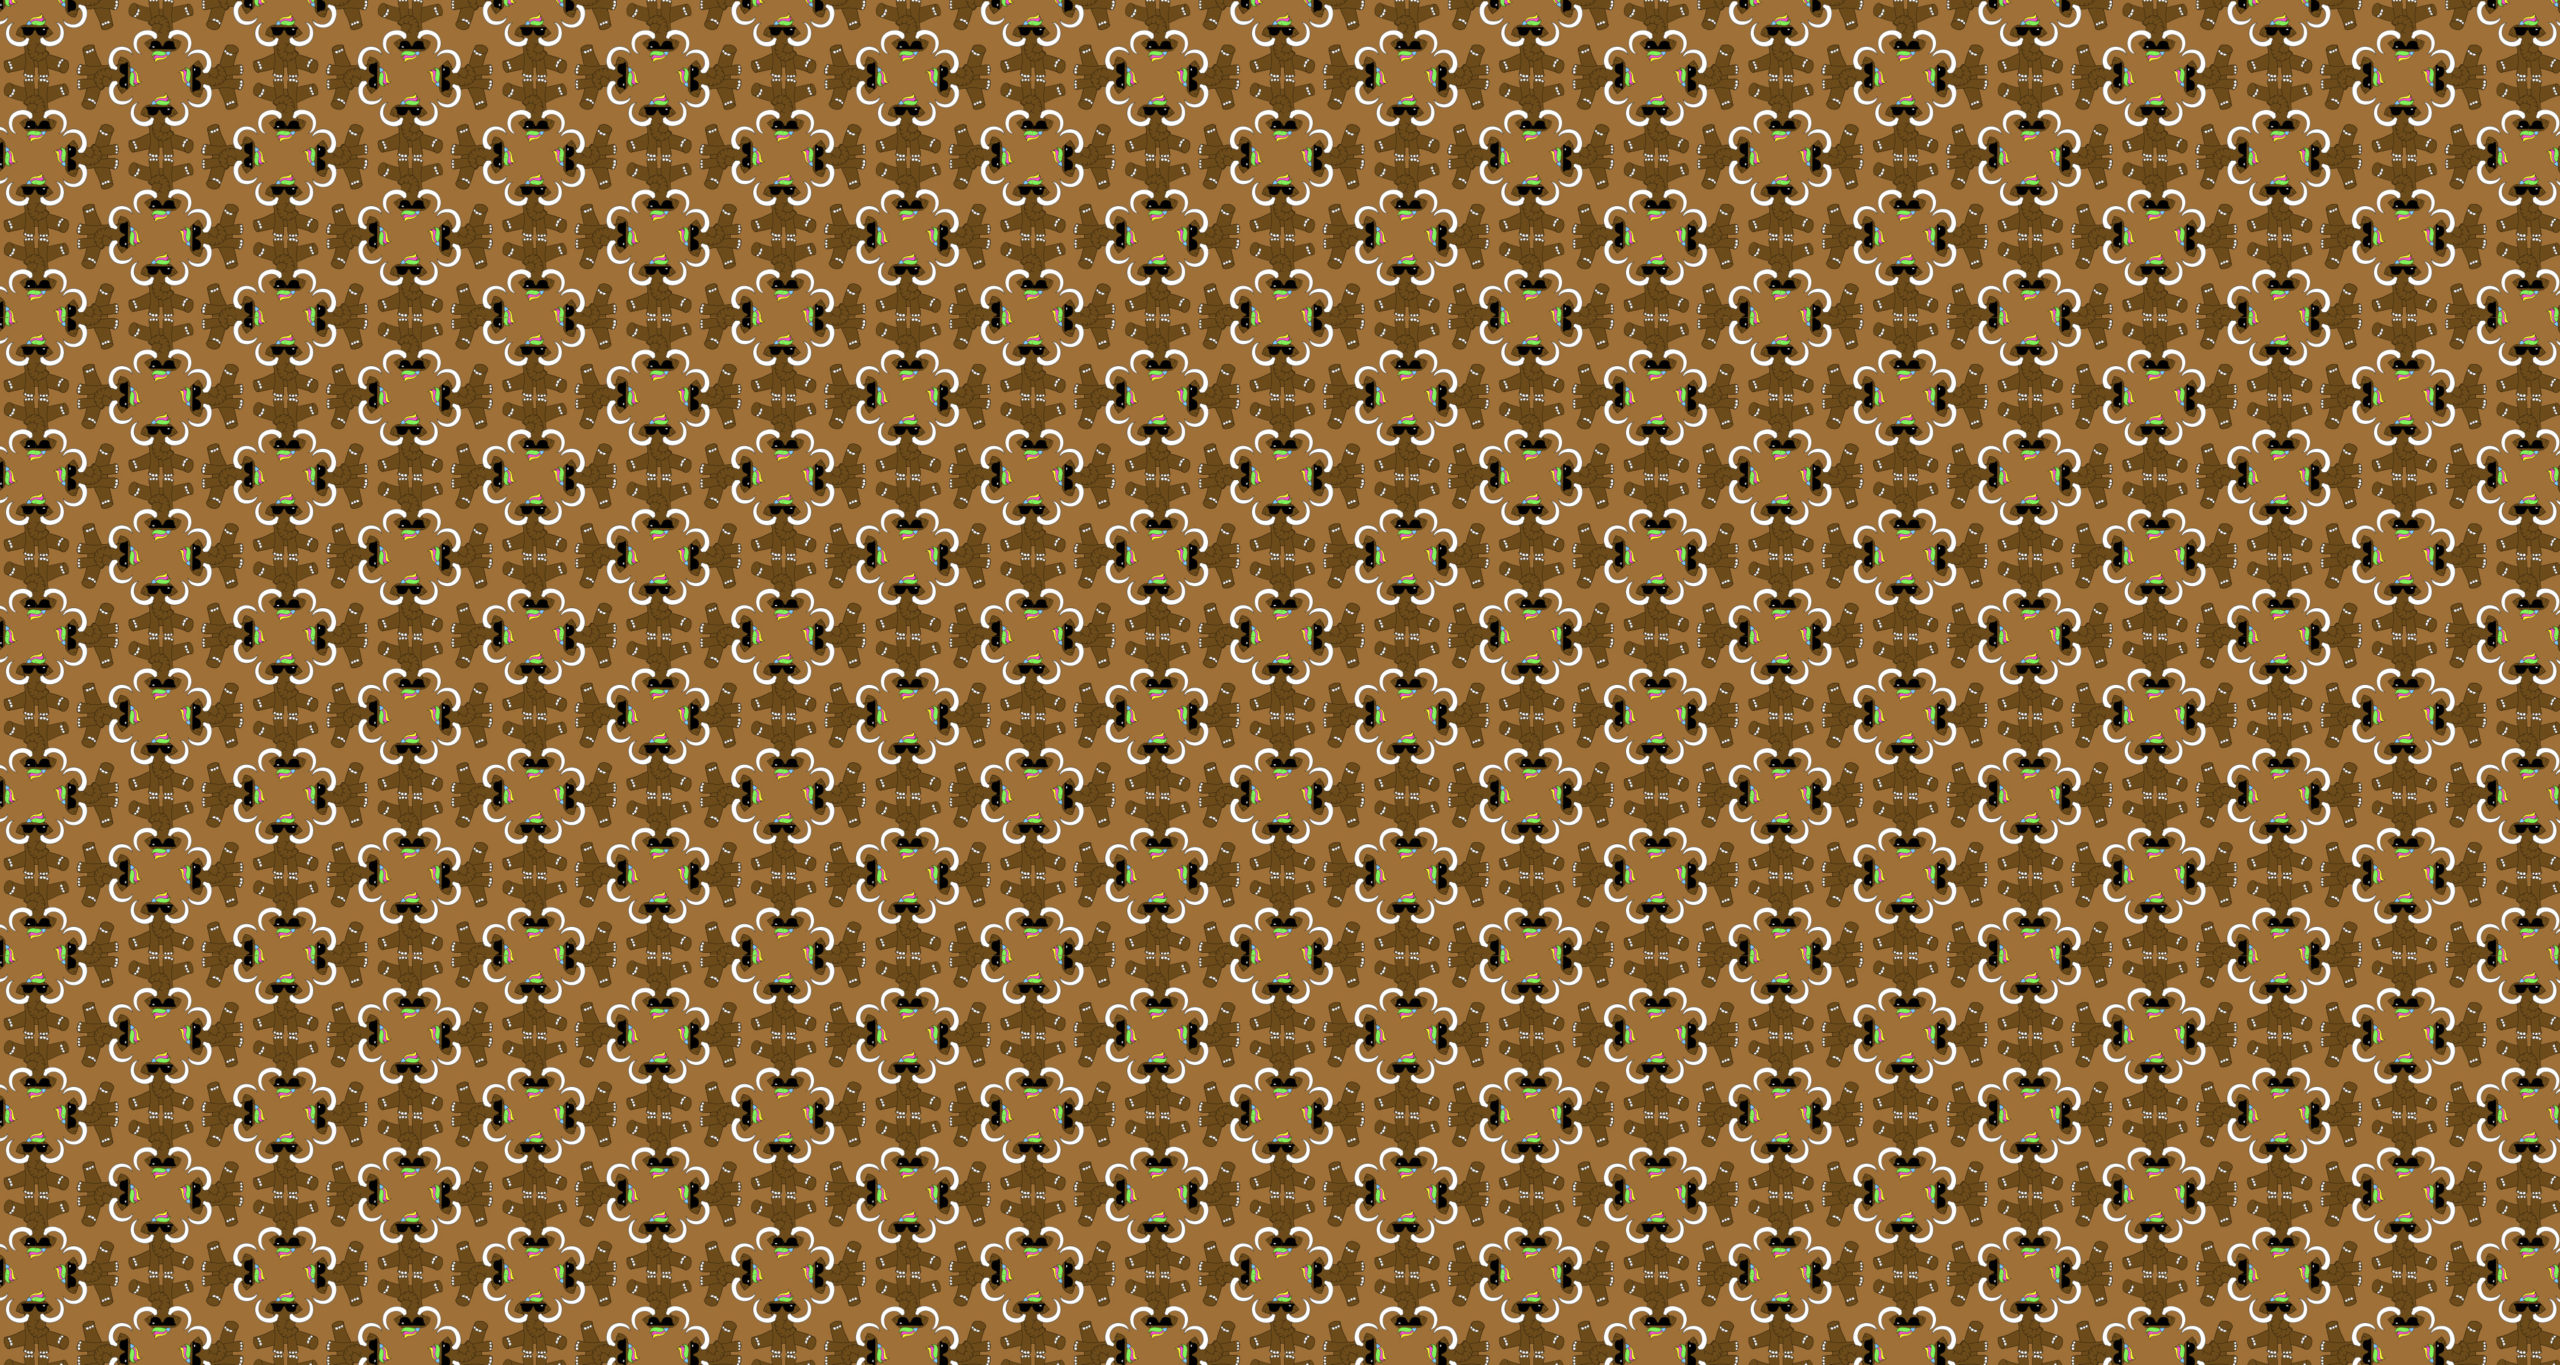 5-brown-pattern